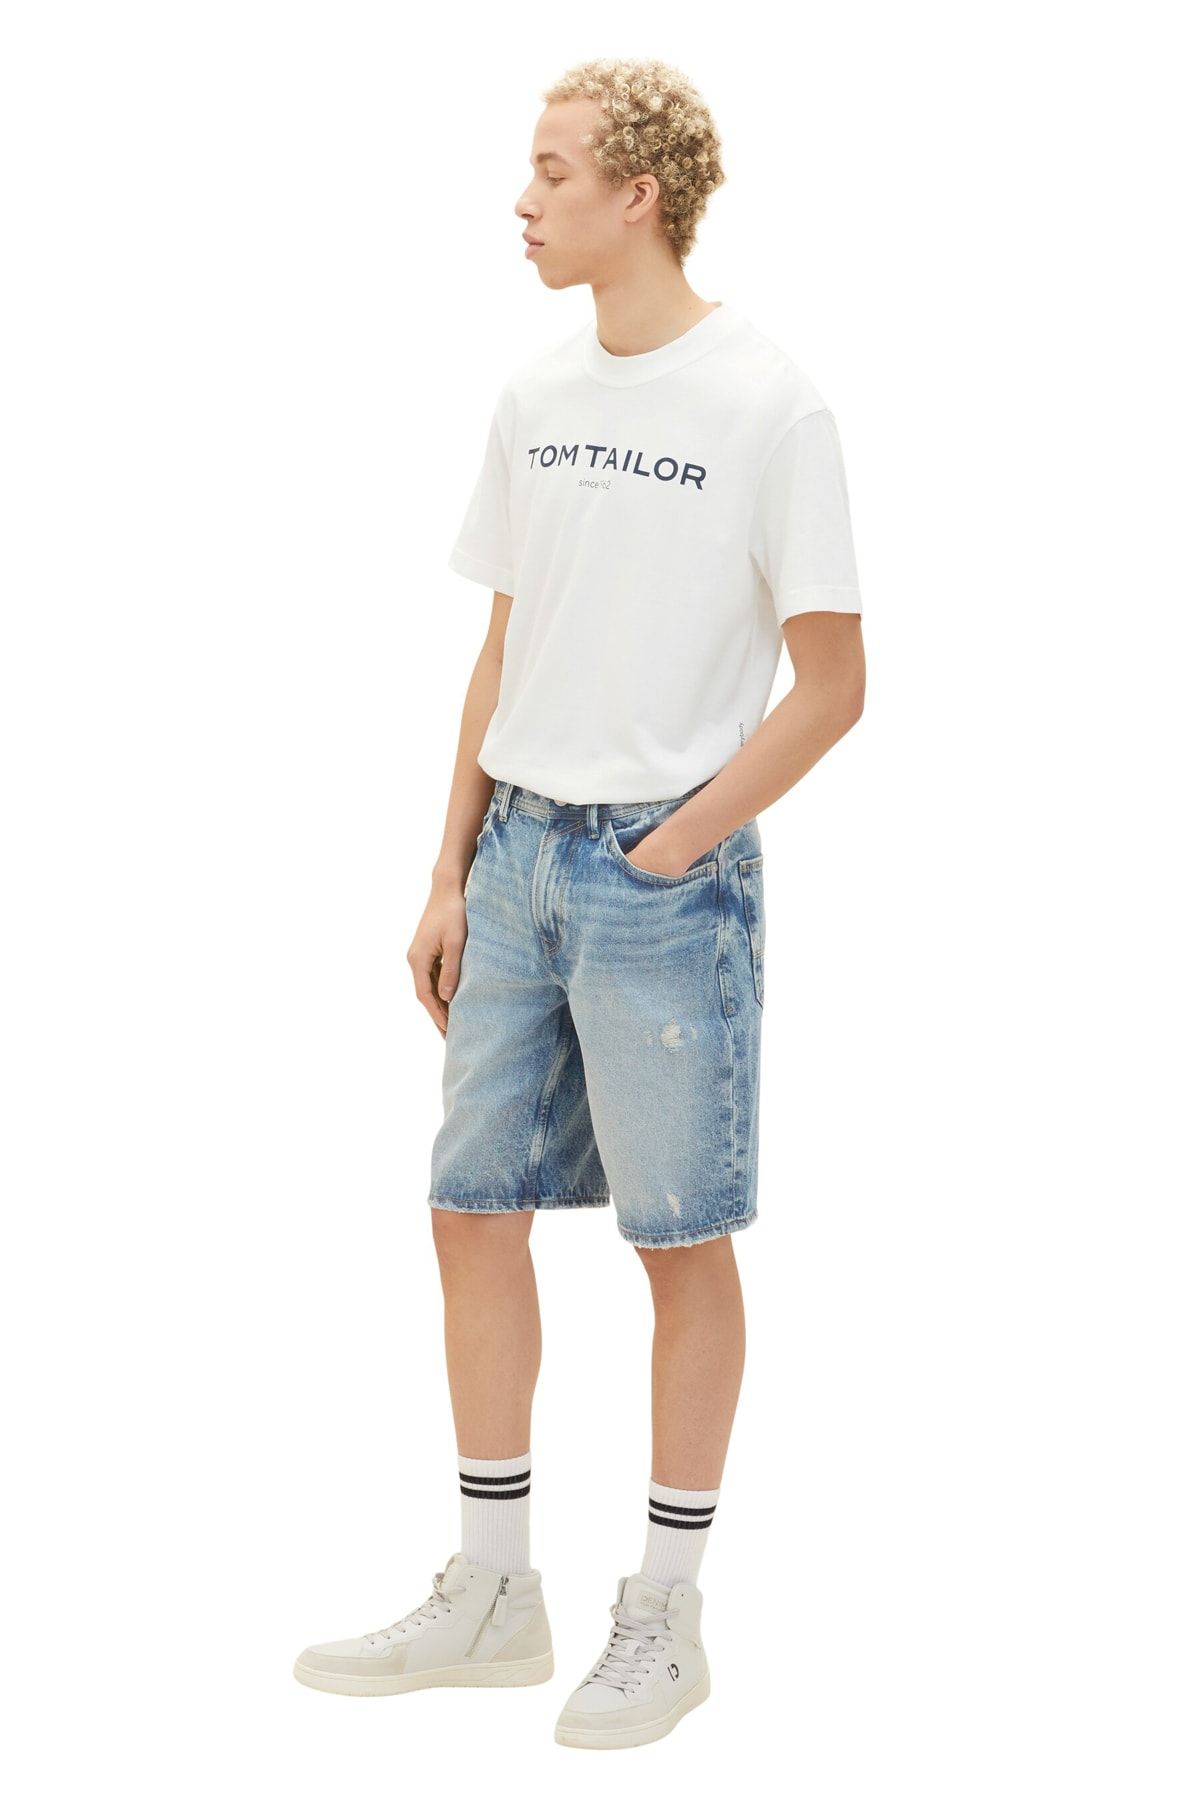 Tom Tailor Denim Shorts - Gray - Normal Waist - Trendyol